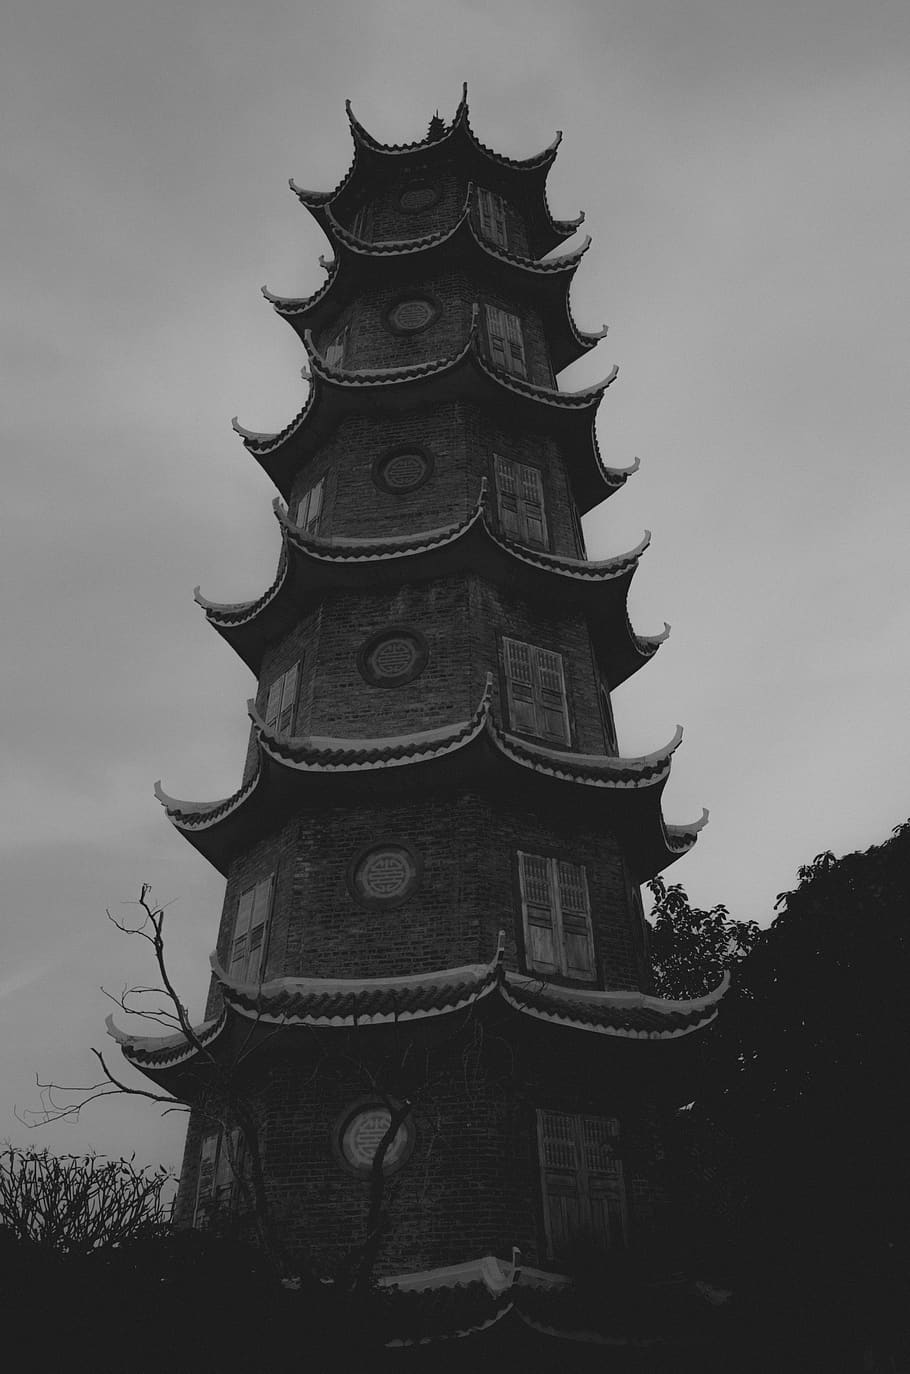 vietnam, ba vì, black and white, bw, pagoda, sky, acient, tree